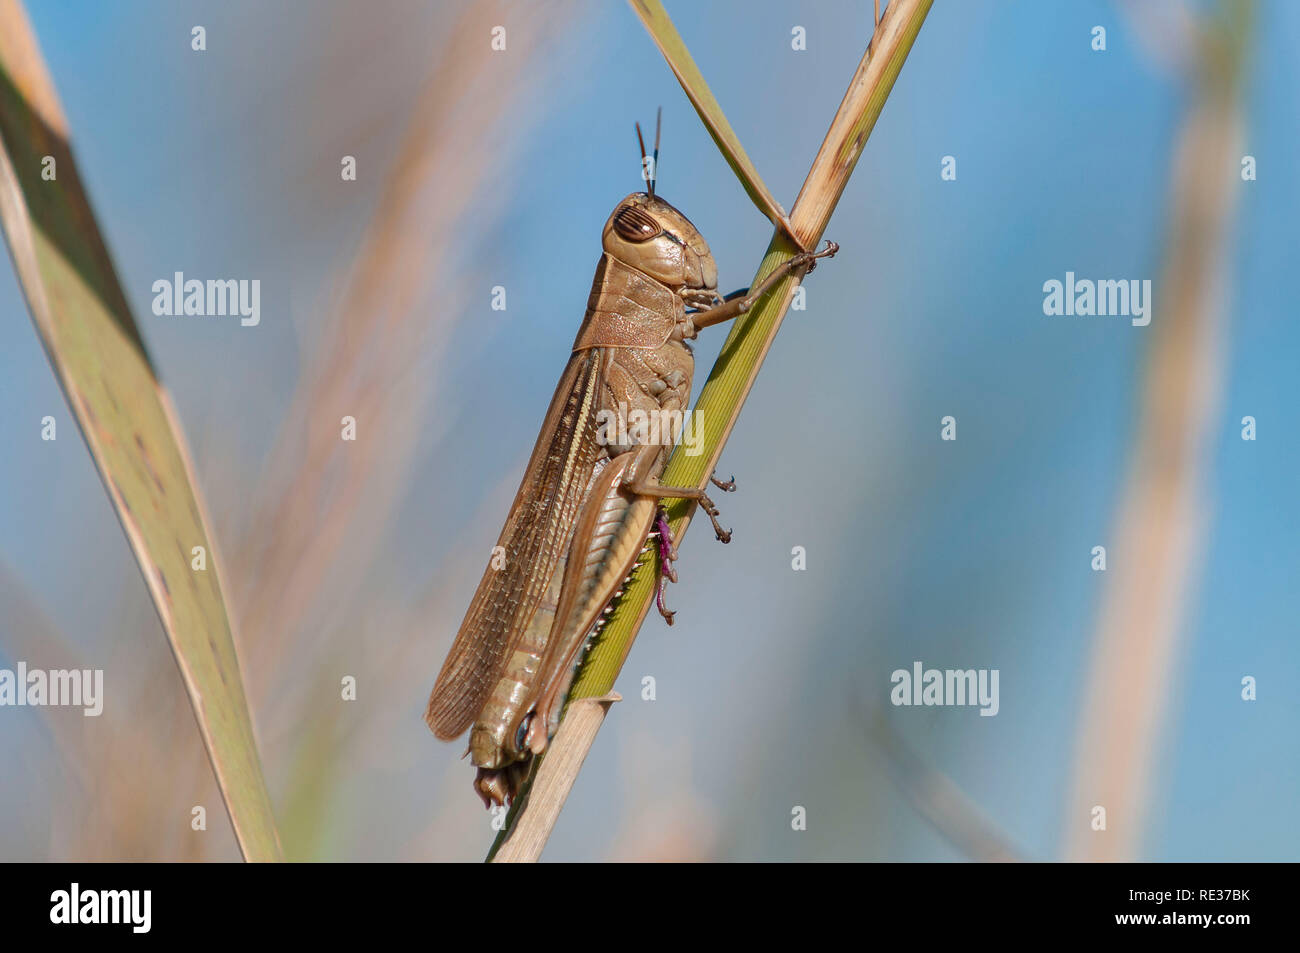 Anacridium aegyptium. Grasshopper Stock Photo